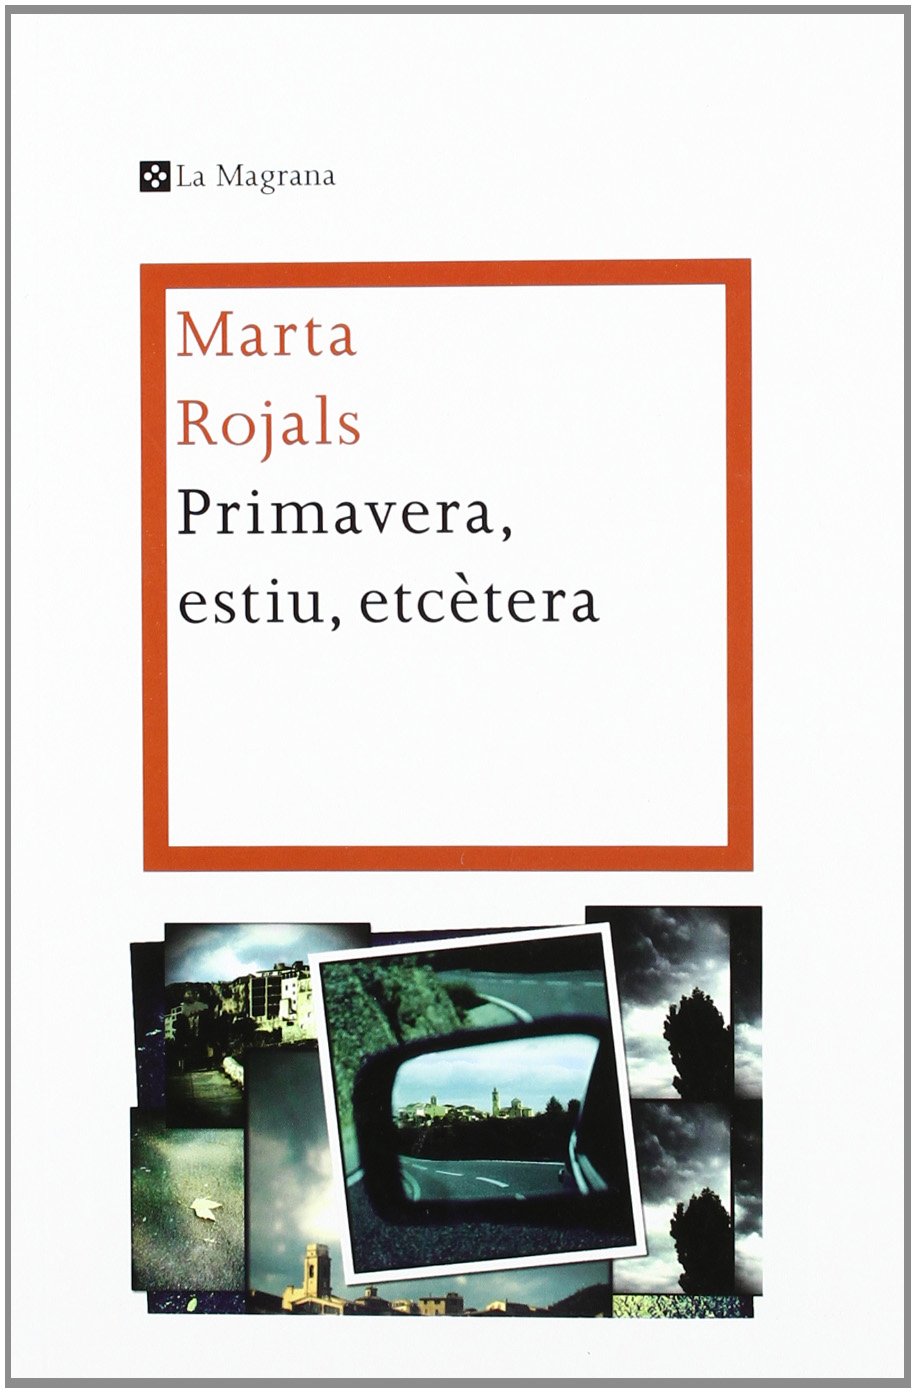 Marta Rojals: Primavera, estiu, etcètera (català language, 2011, La Magrana)